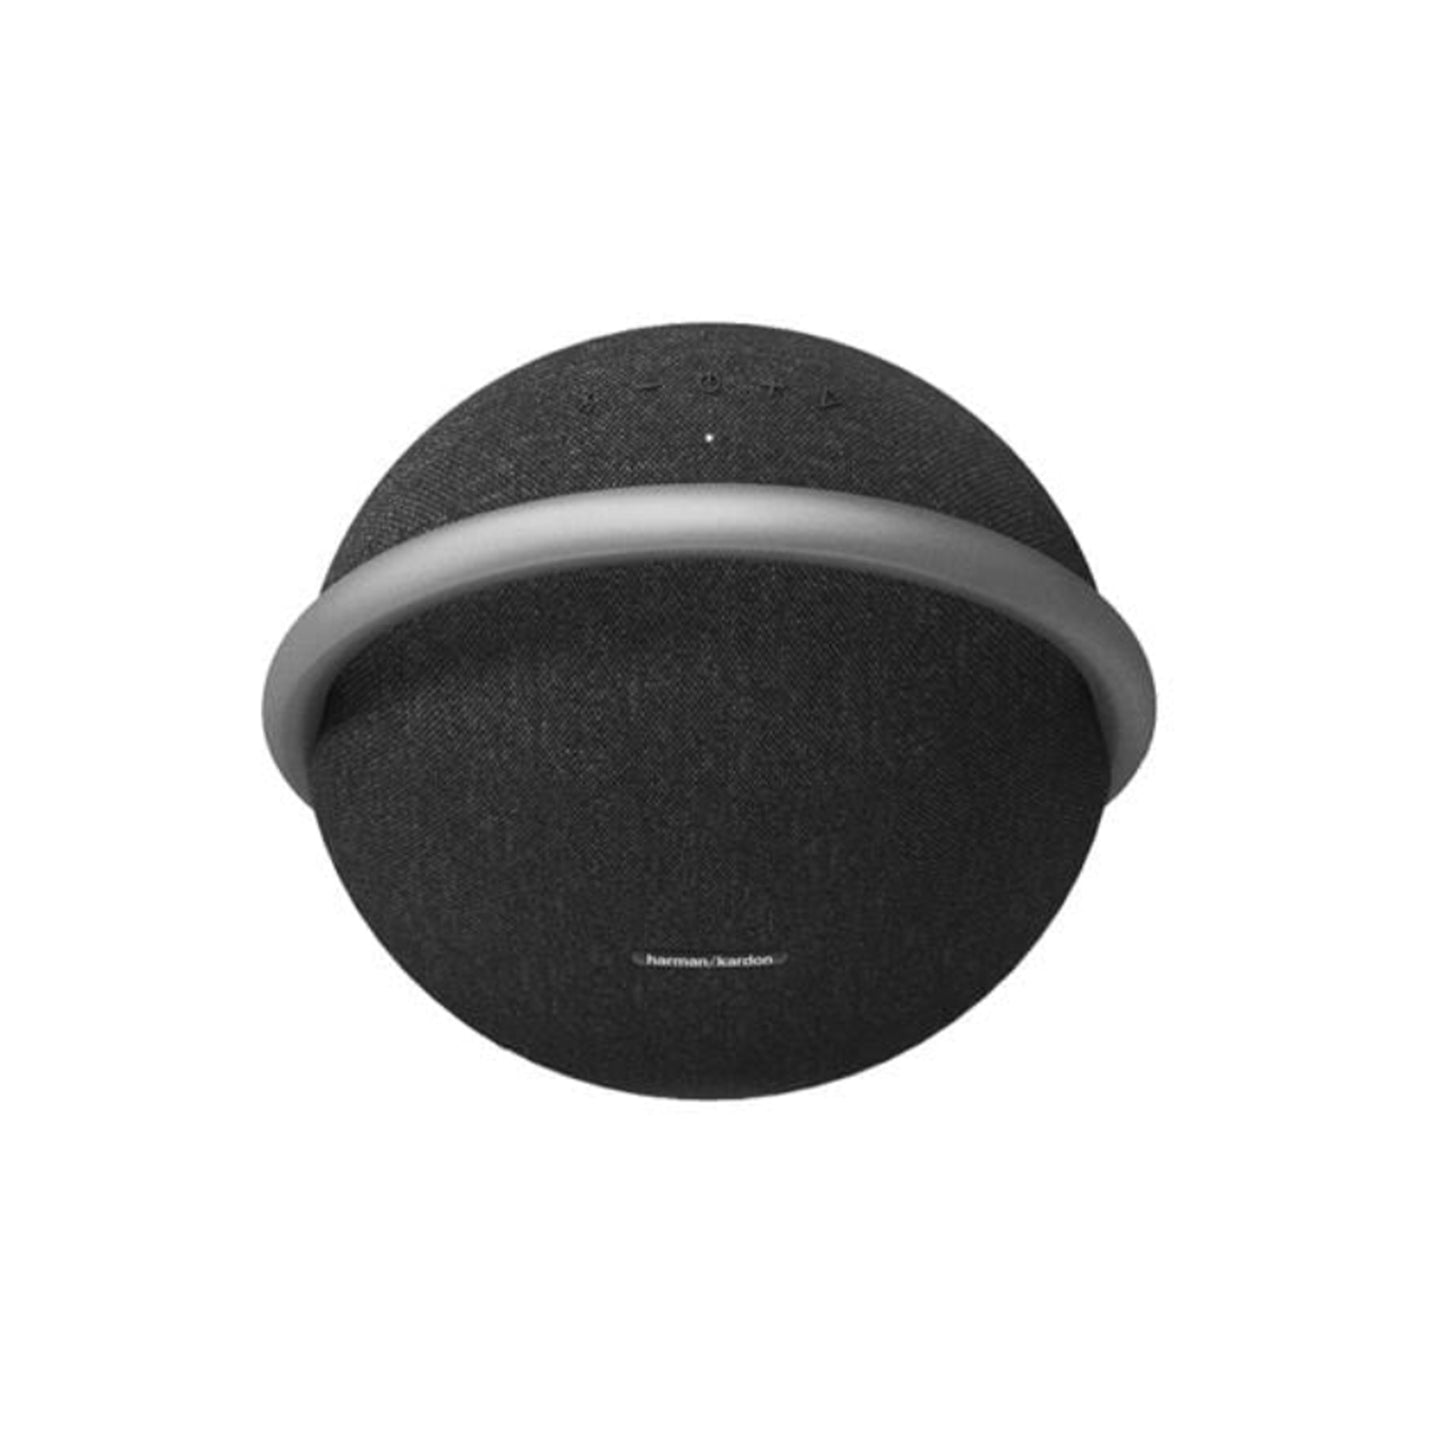 HARMAN KARDON Onyx Studio 7 Portable Bluetooth Speaker - Black